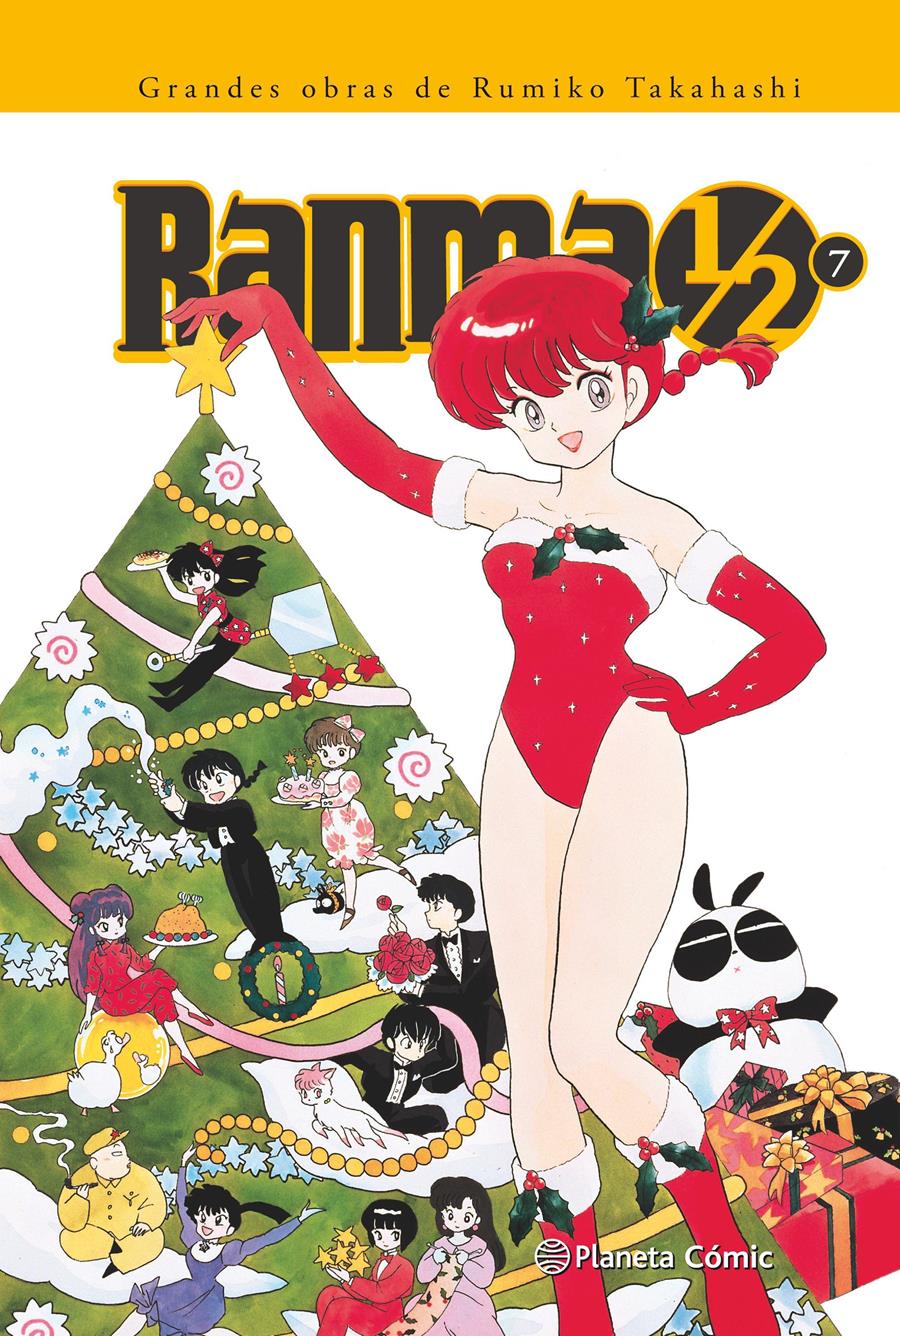 Ranma 1/2 Kanzenban nº 07/19 | N0113-EDT03 | Rumiko Takahashi | Terra de Còmic - Tu tienda de cómics online especializada en cómics, manga y merchandising